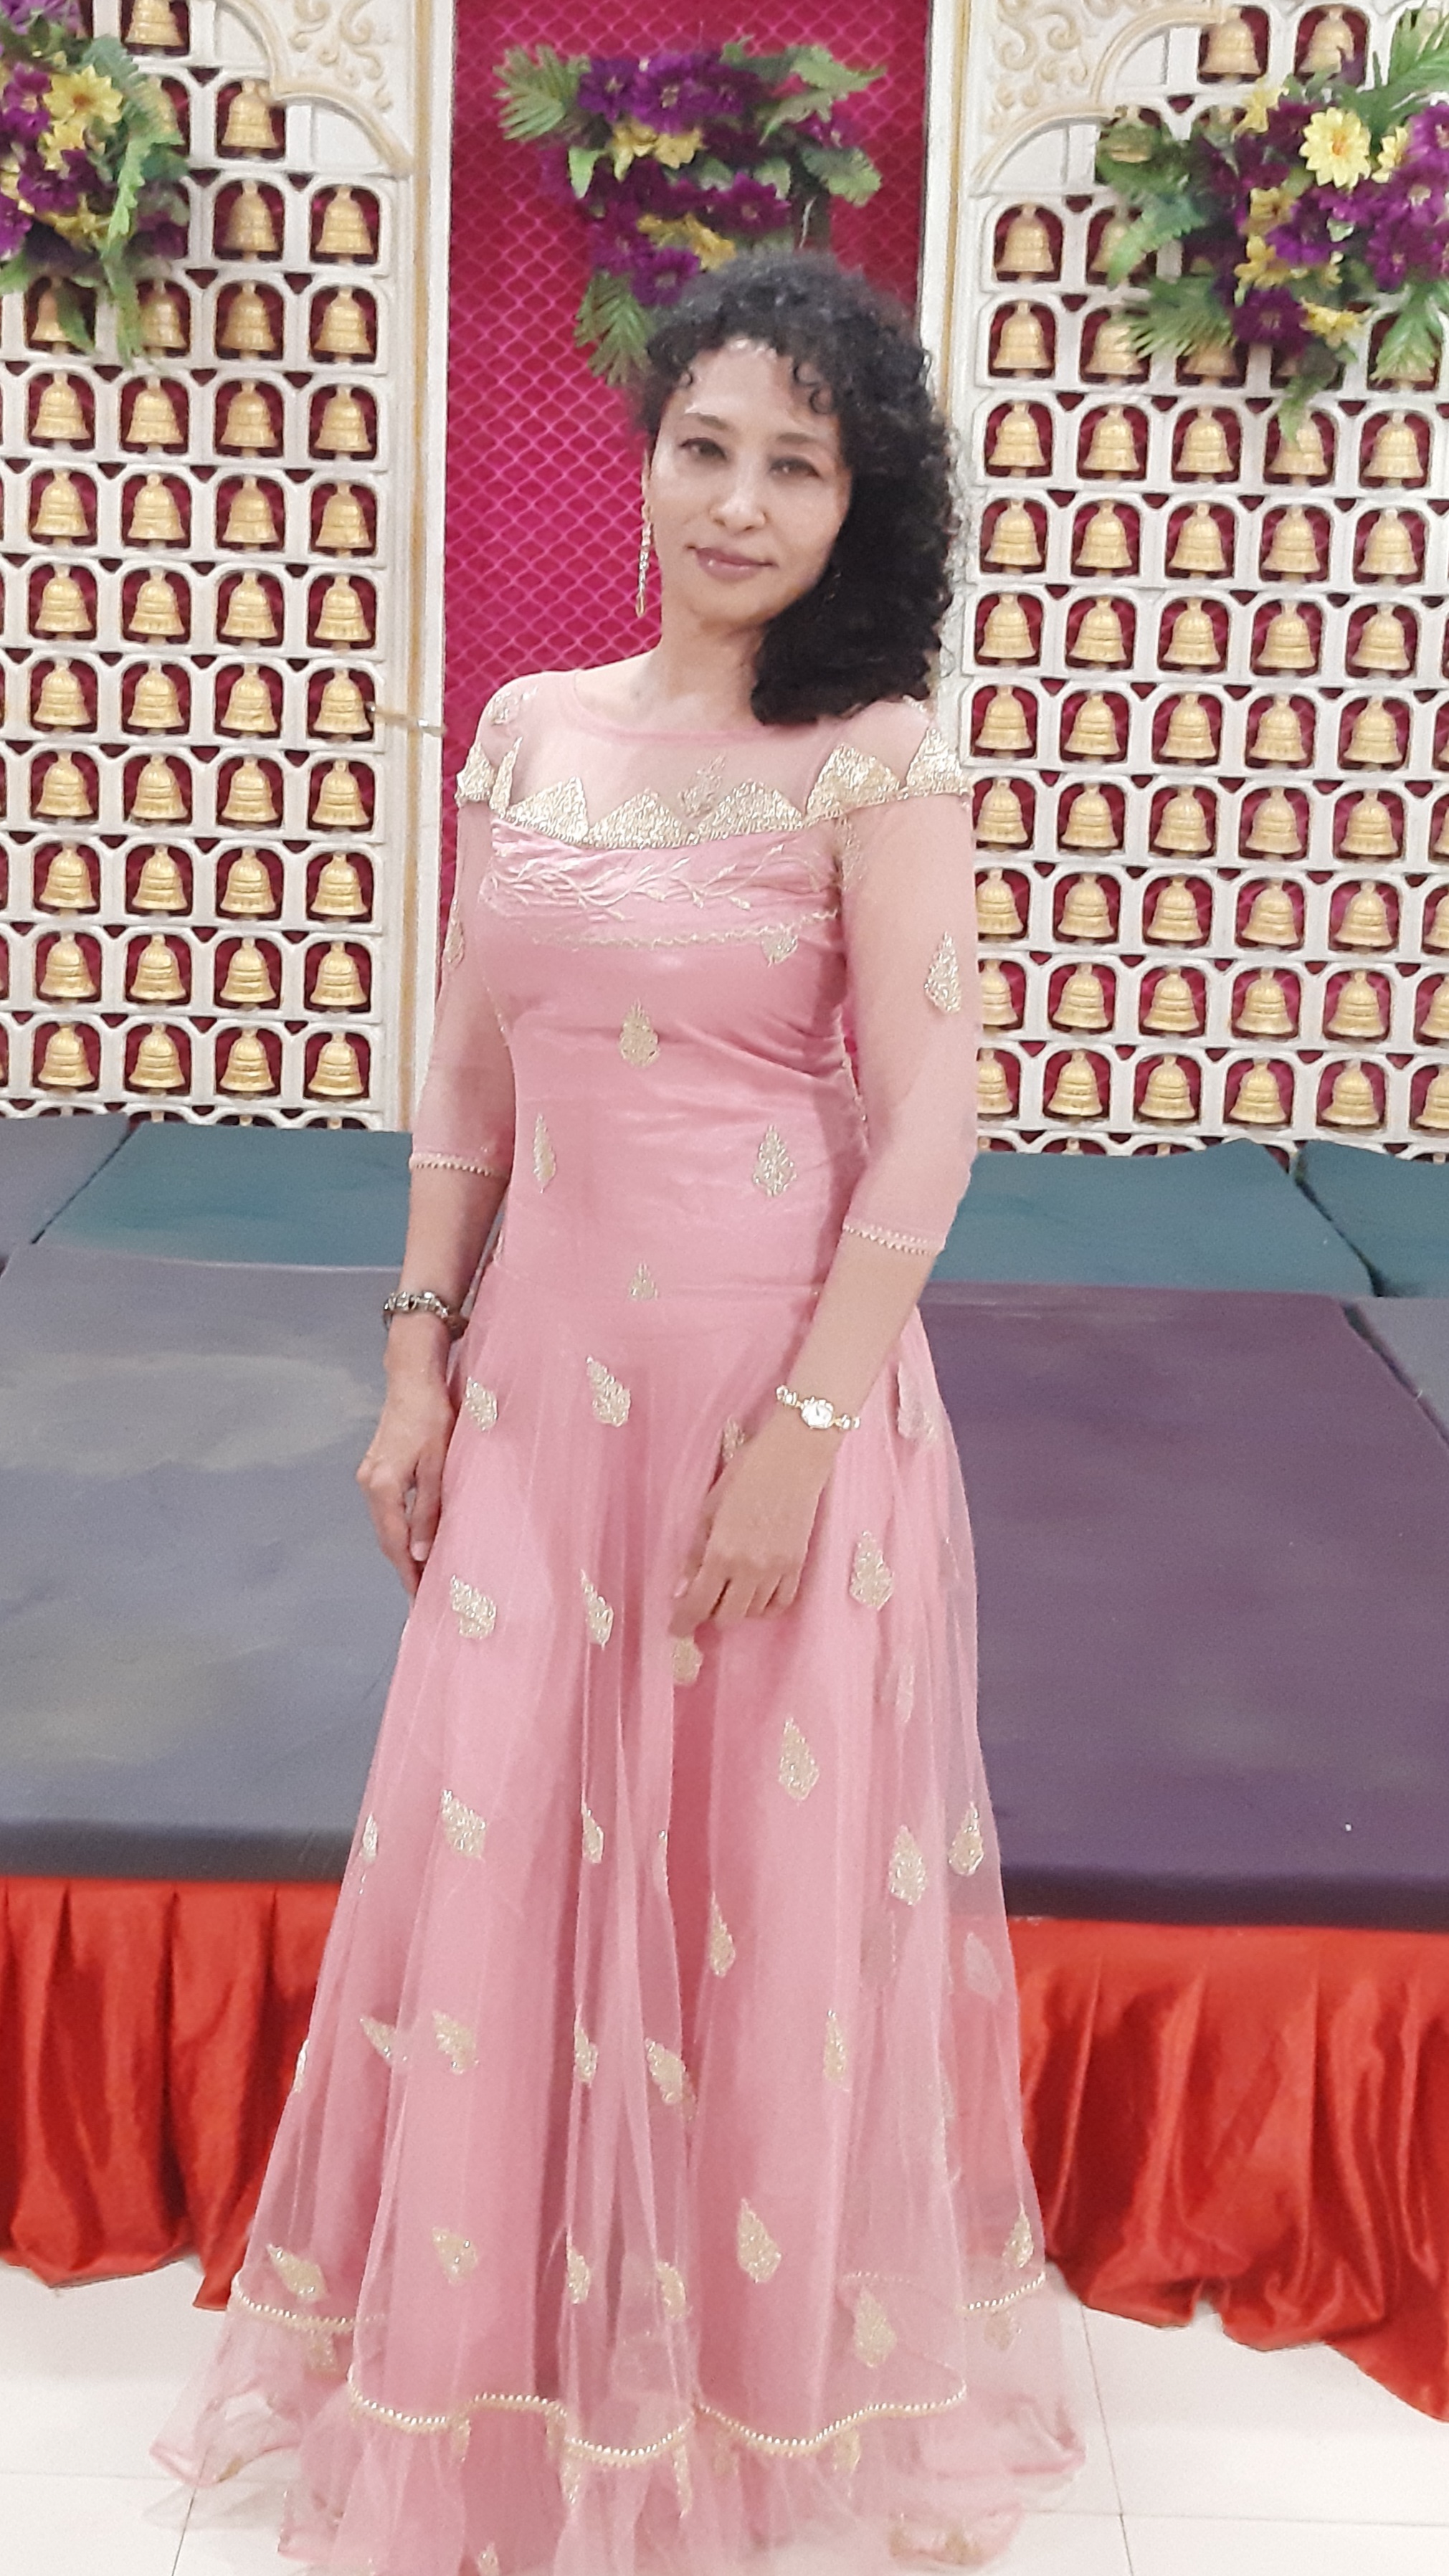 Epitome of Indian beauty: Myna Mahila Foundation members wear saree to the  royal wedding - The Economic Times